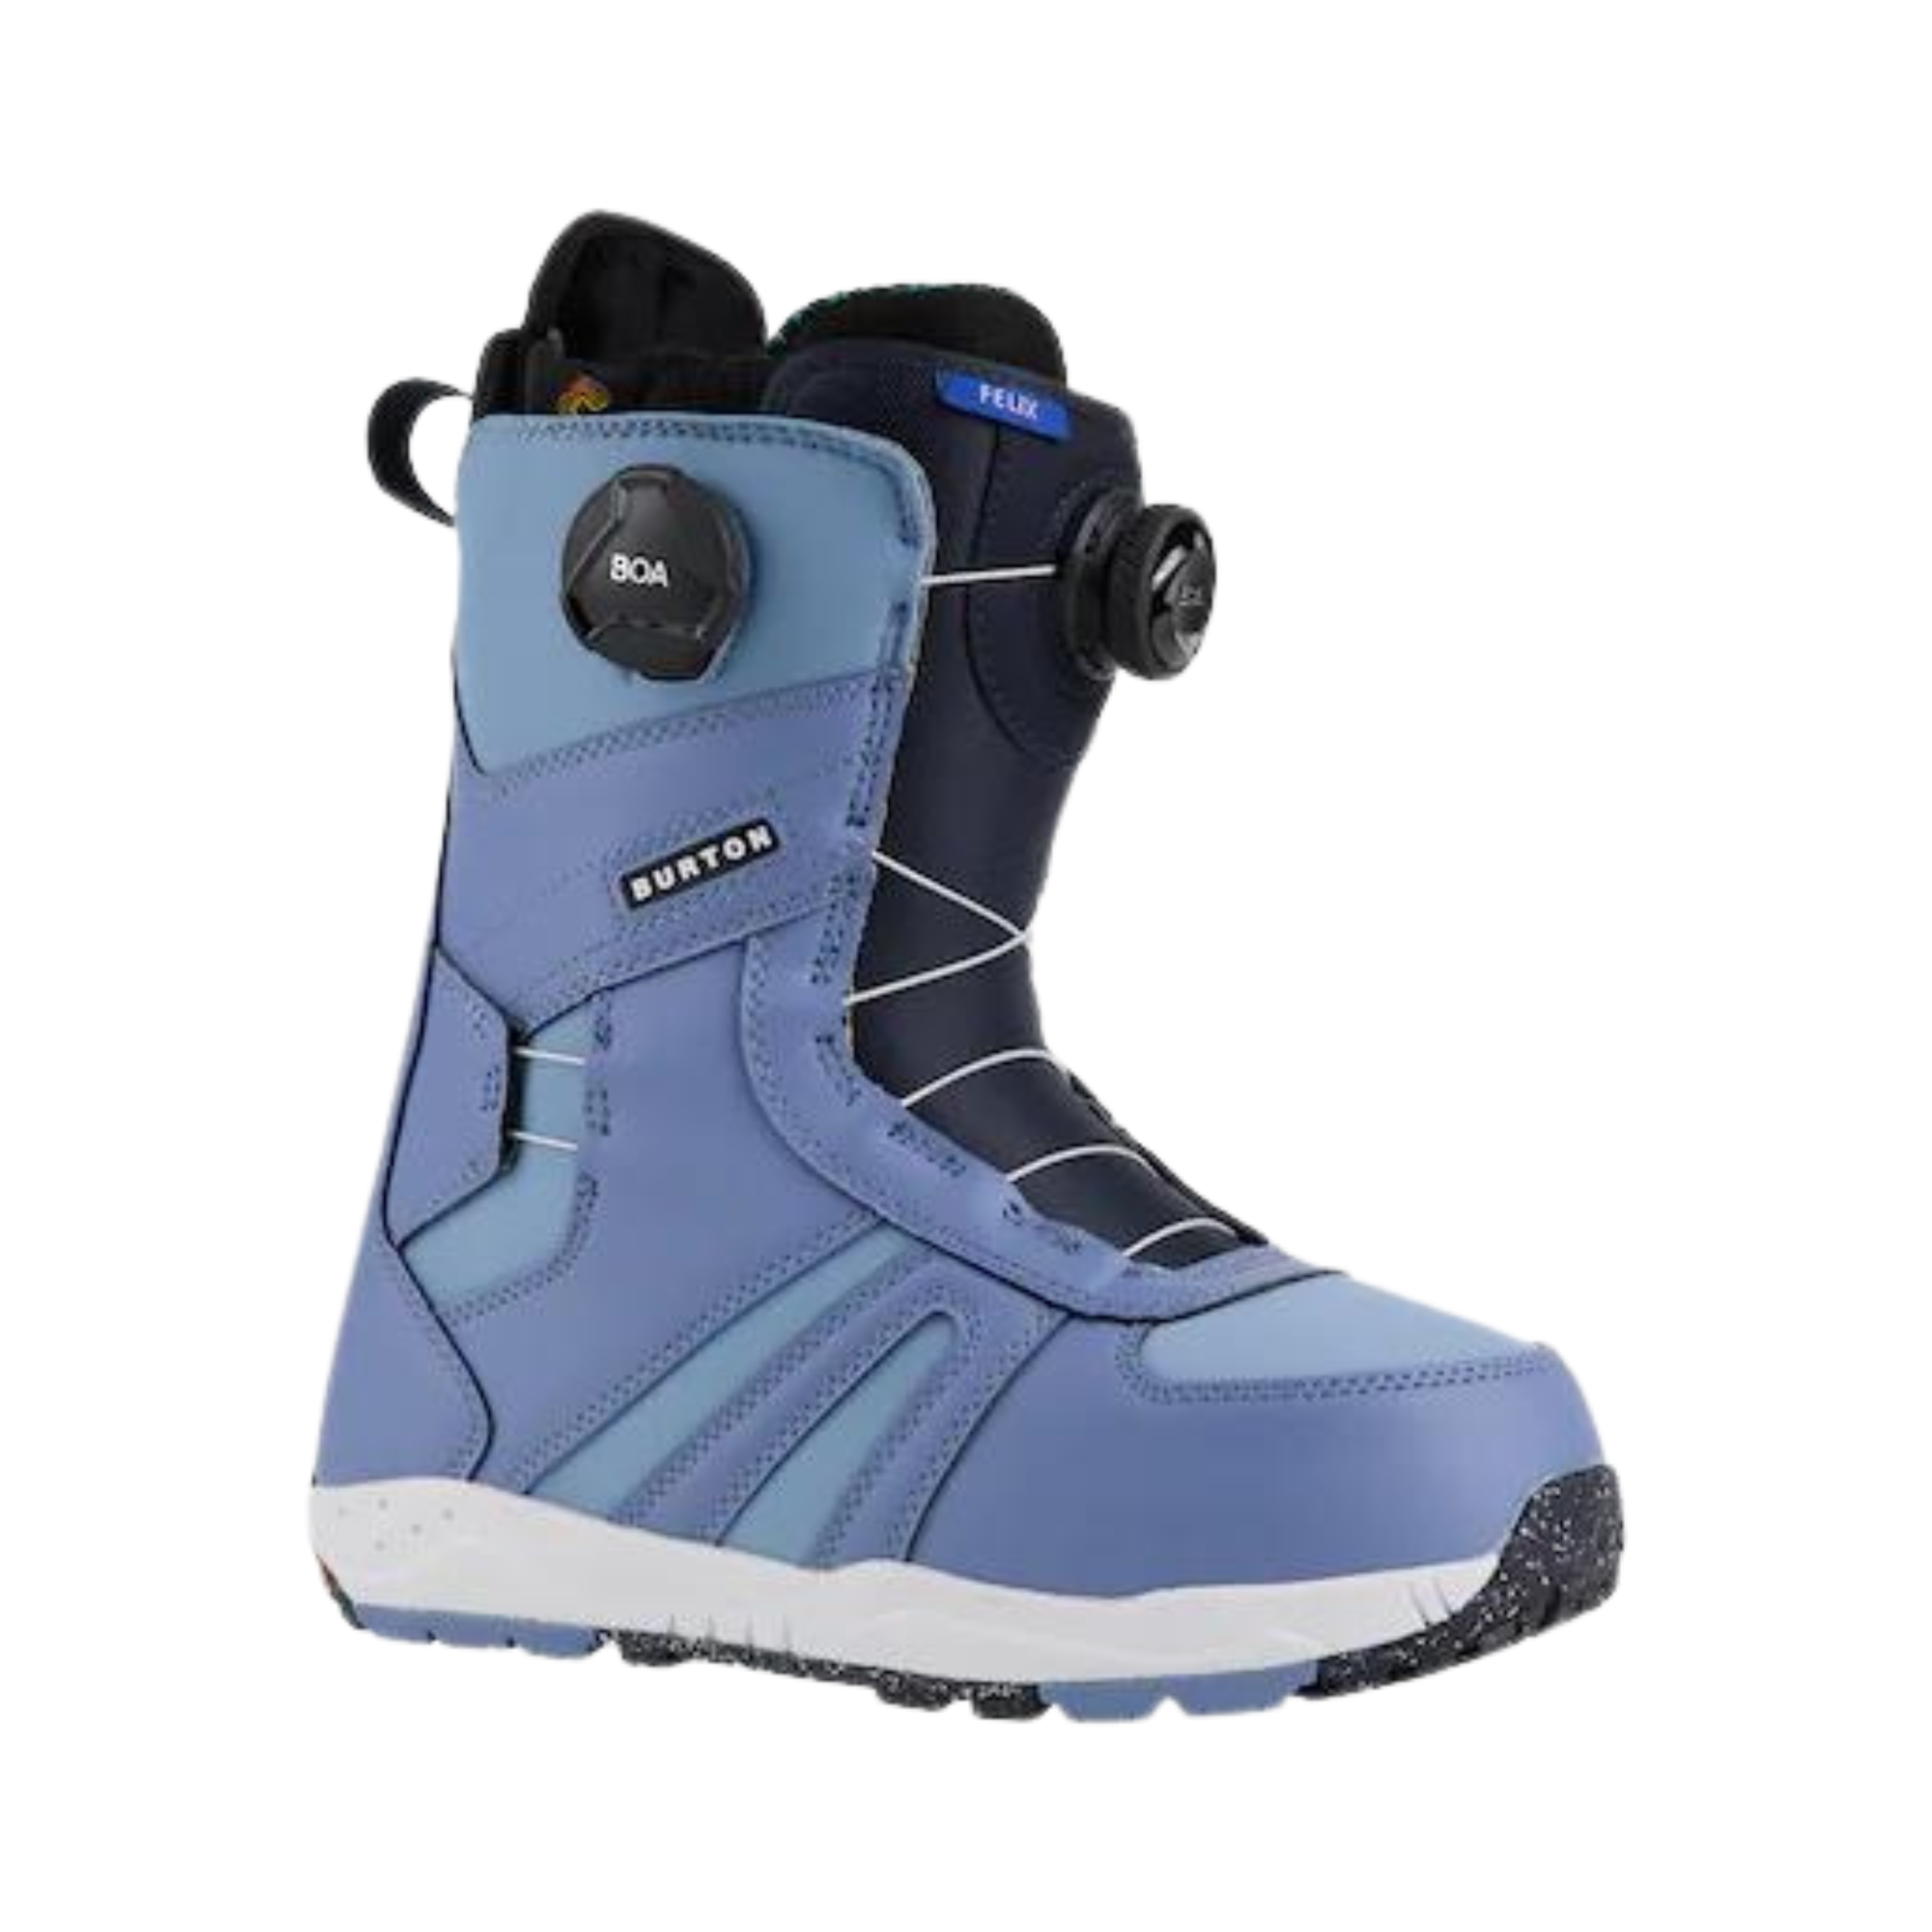 Burton - Women's Felix BOA® Snowboard Boots - Slate Blue